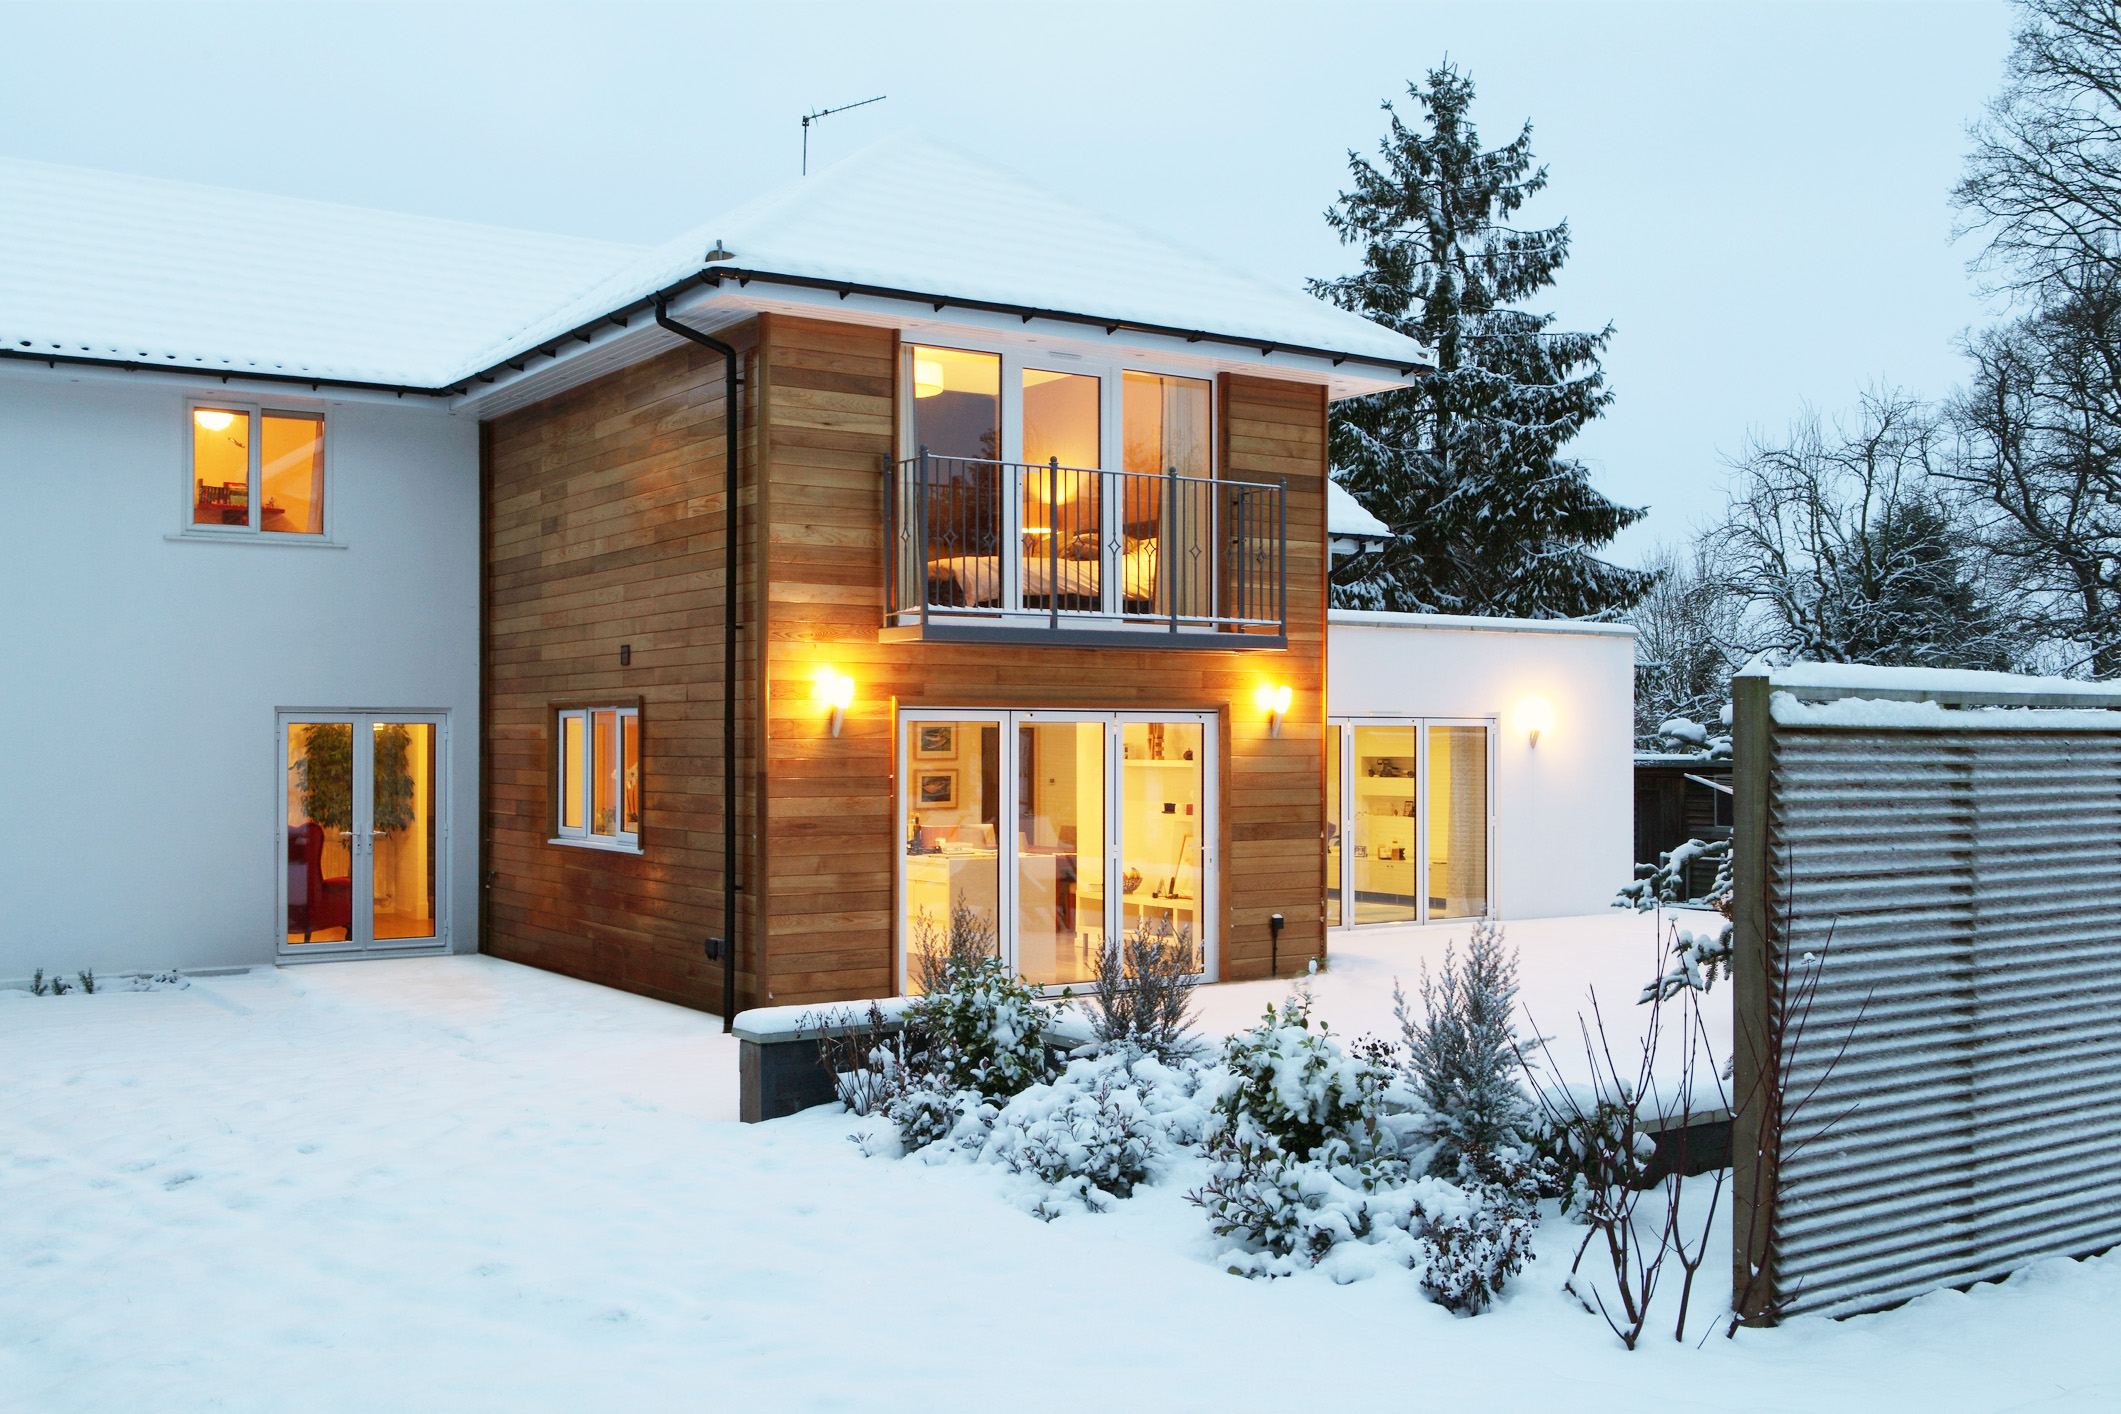 Illuminated family home in snow